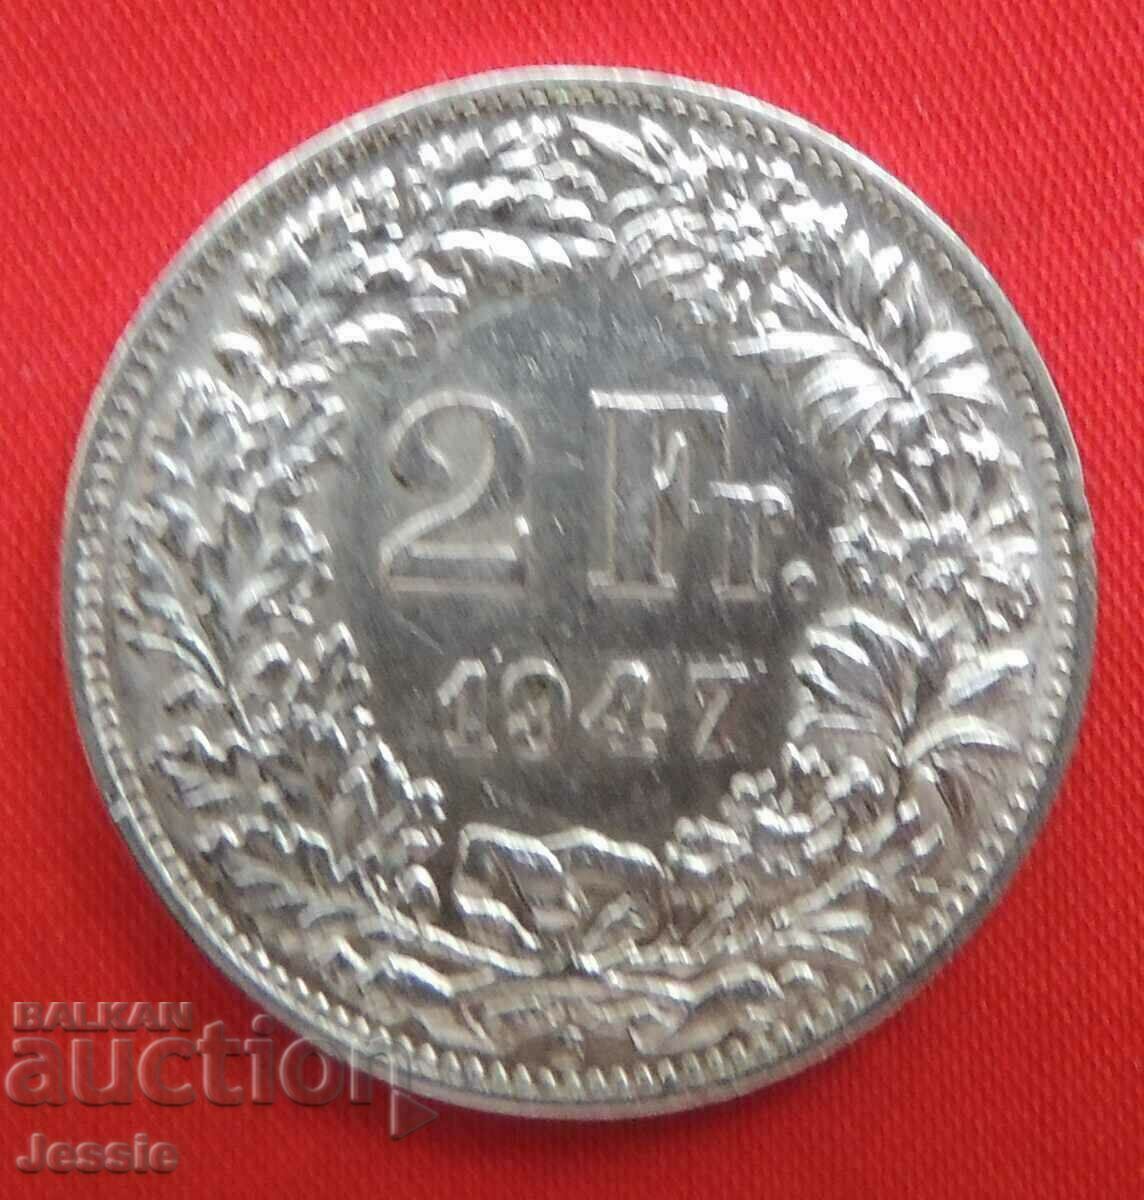 2 Francs 1947 B Switzerland Silver